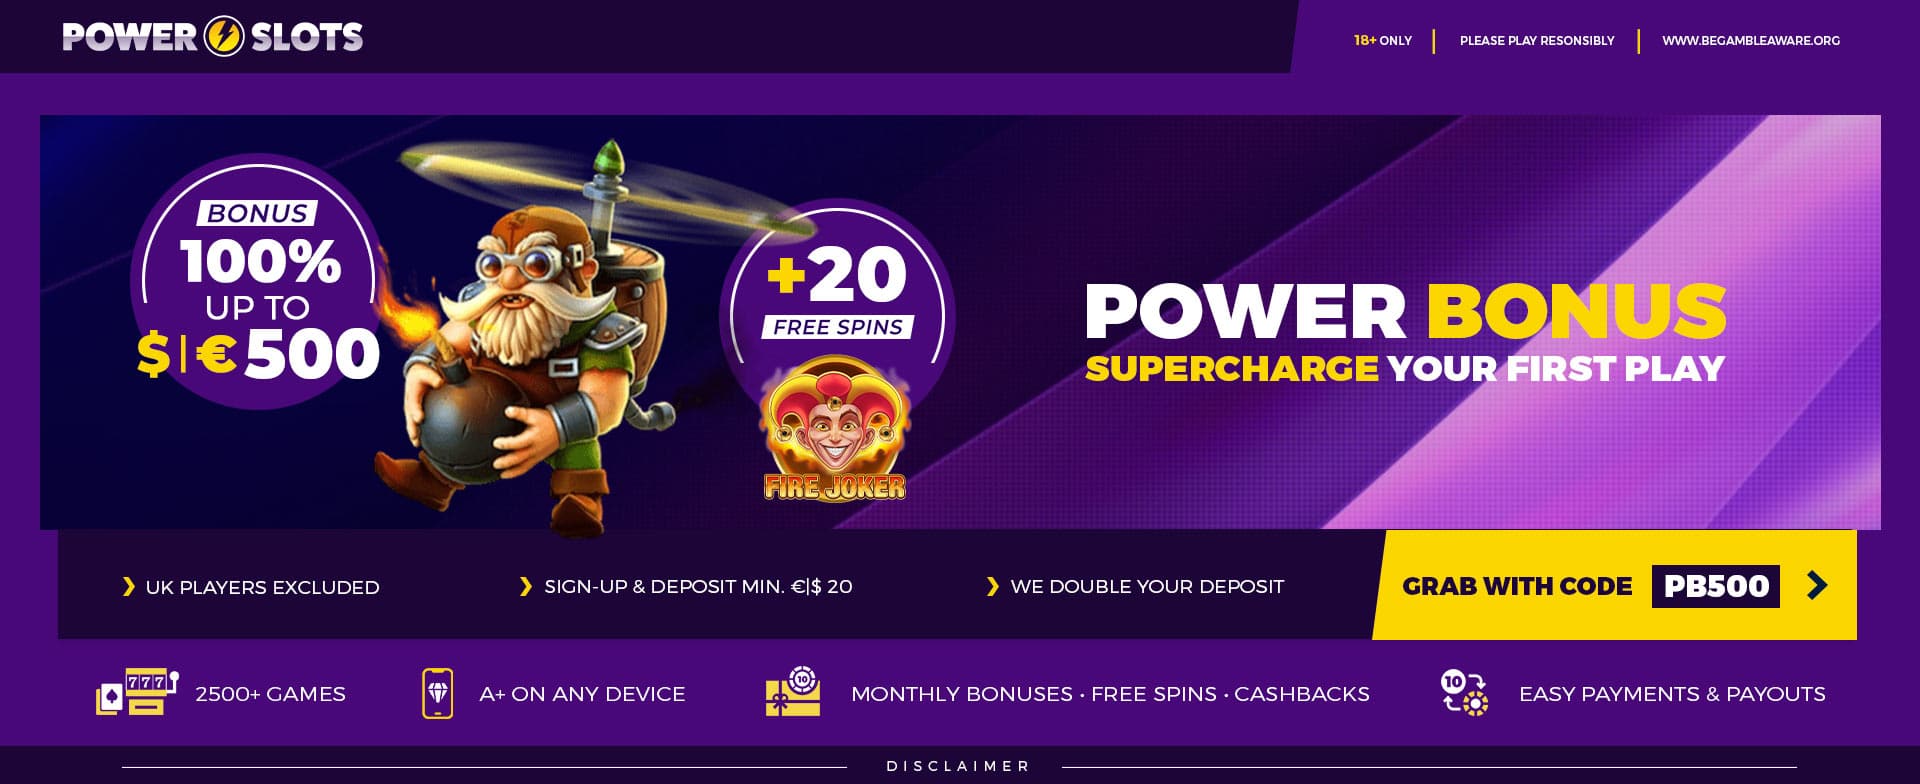 €/$500 Bonus + 20 Free Spins | Power Slots Casino